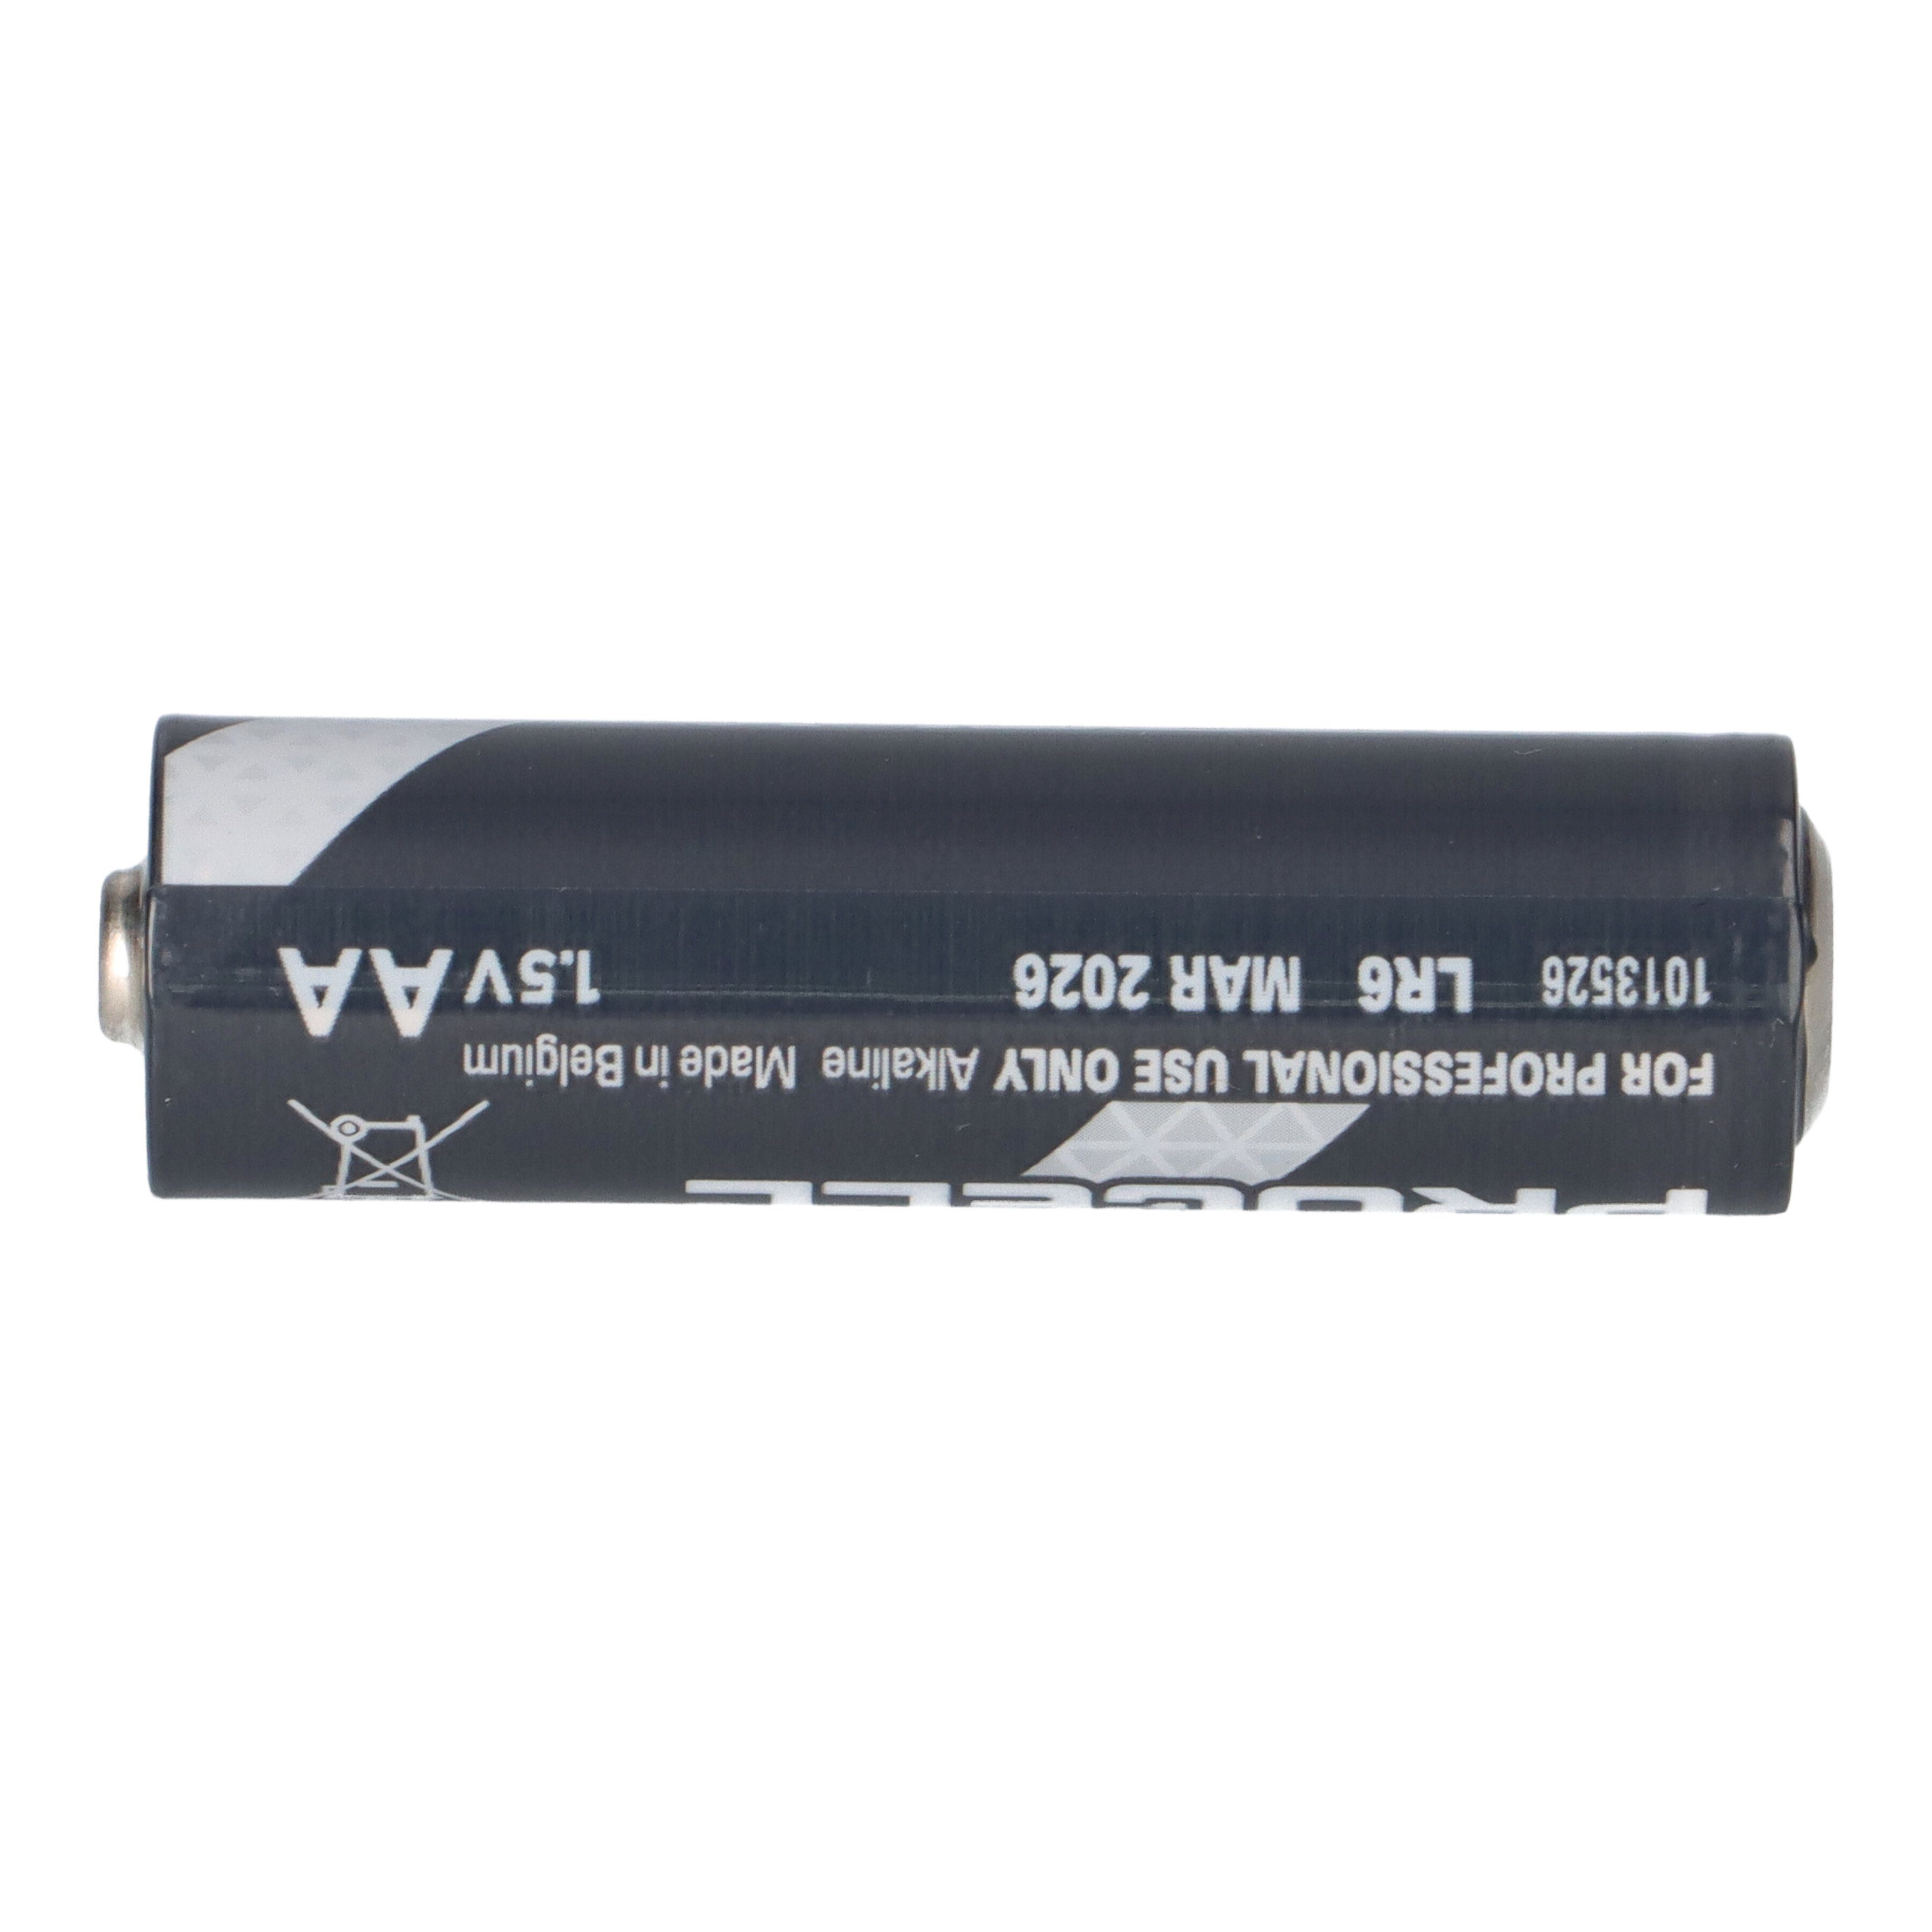 Duracell 30x Procell Batterien AAA MN2400 Micro Batterie